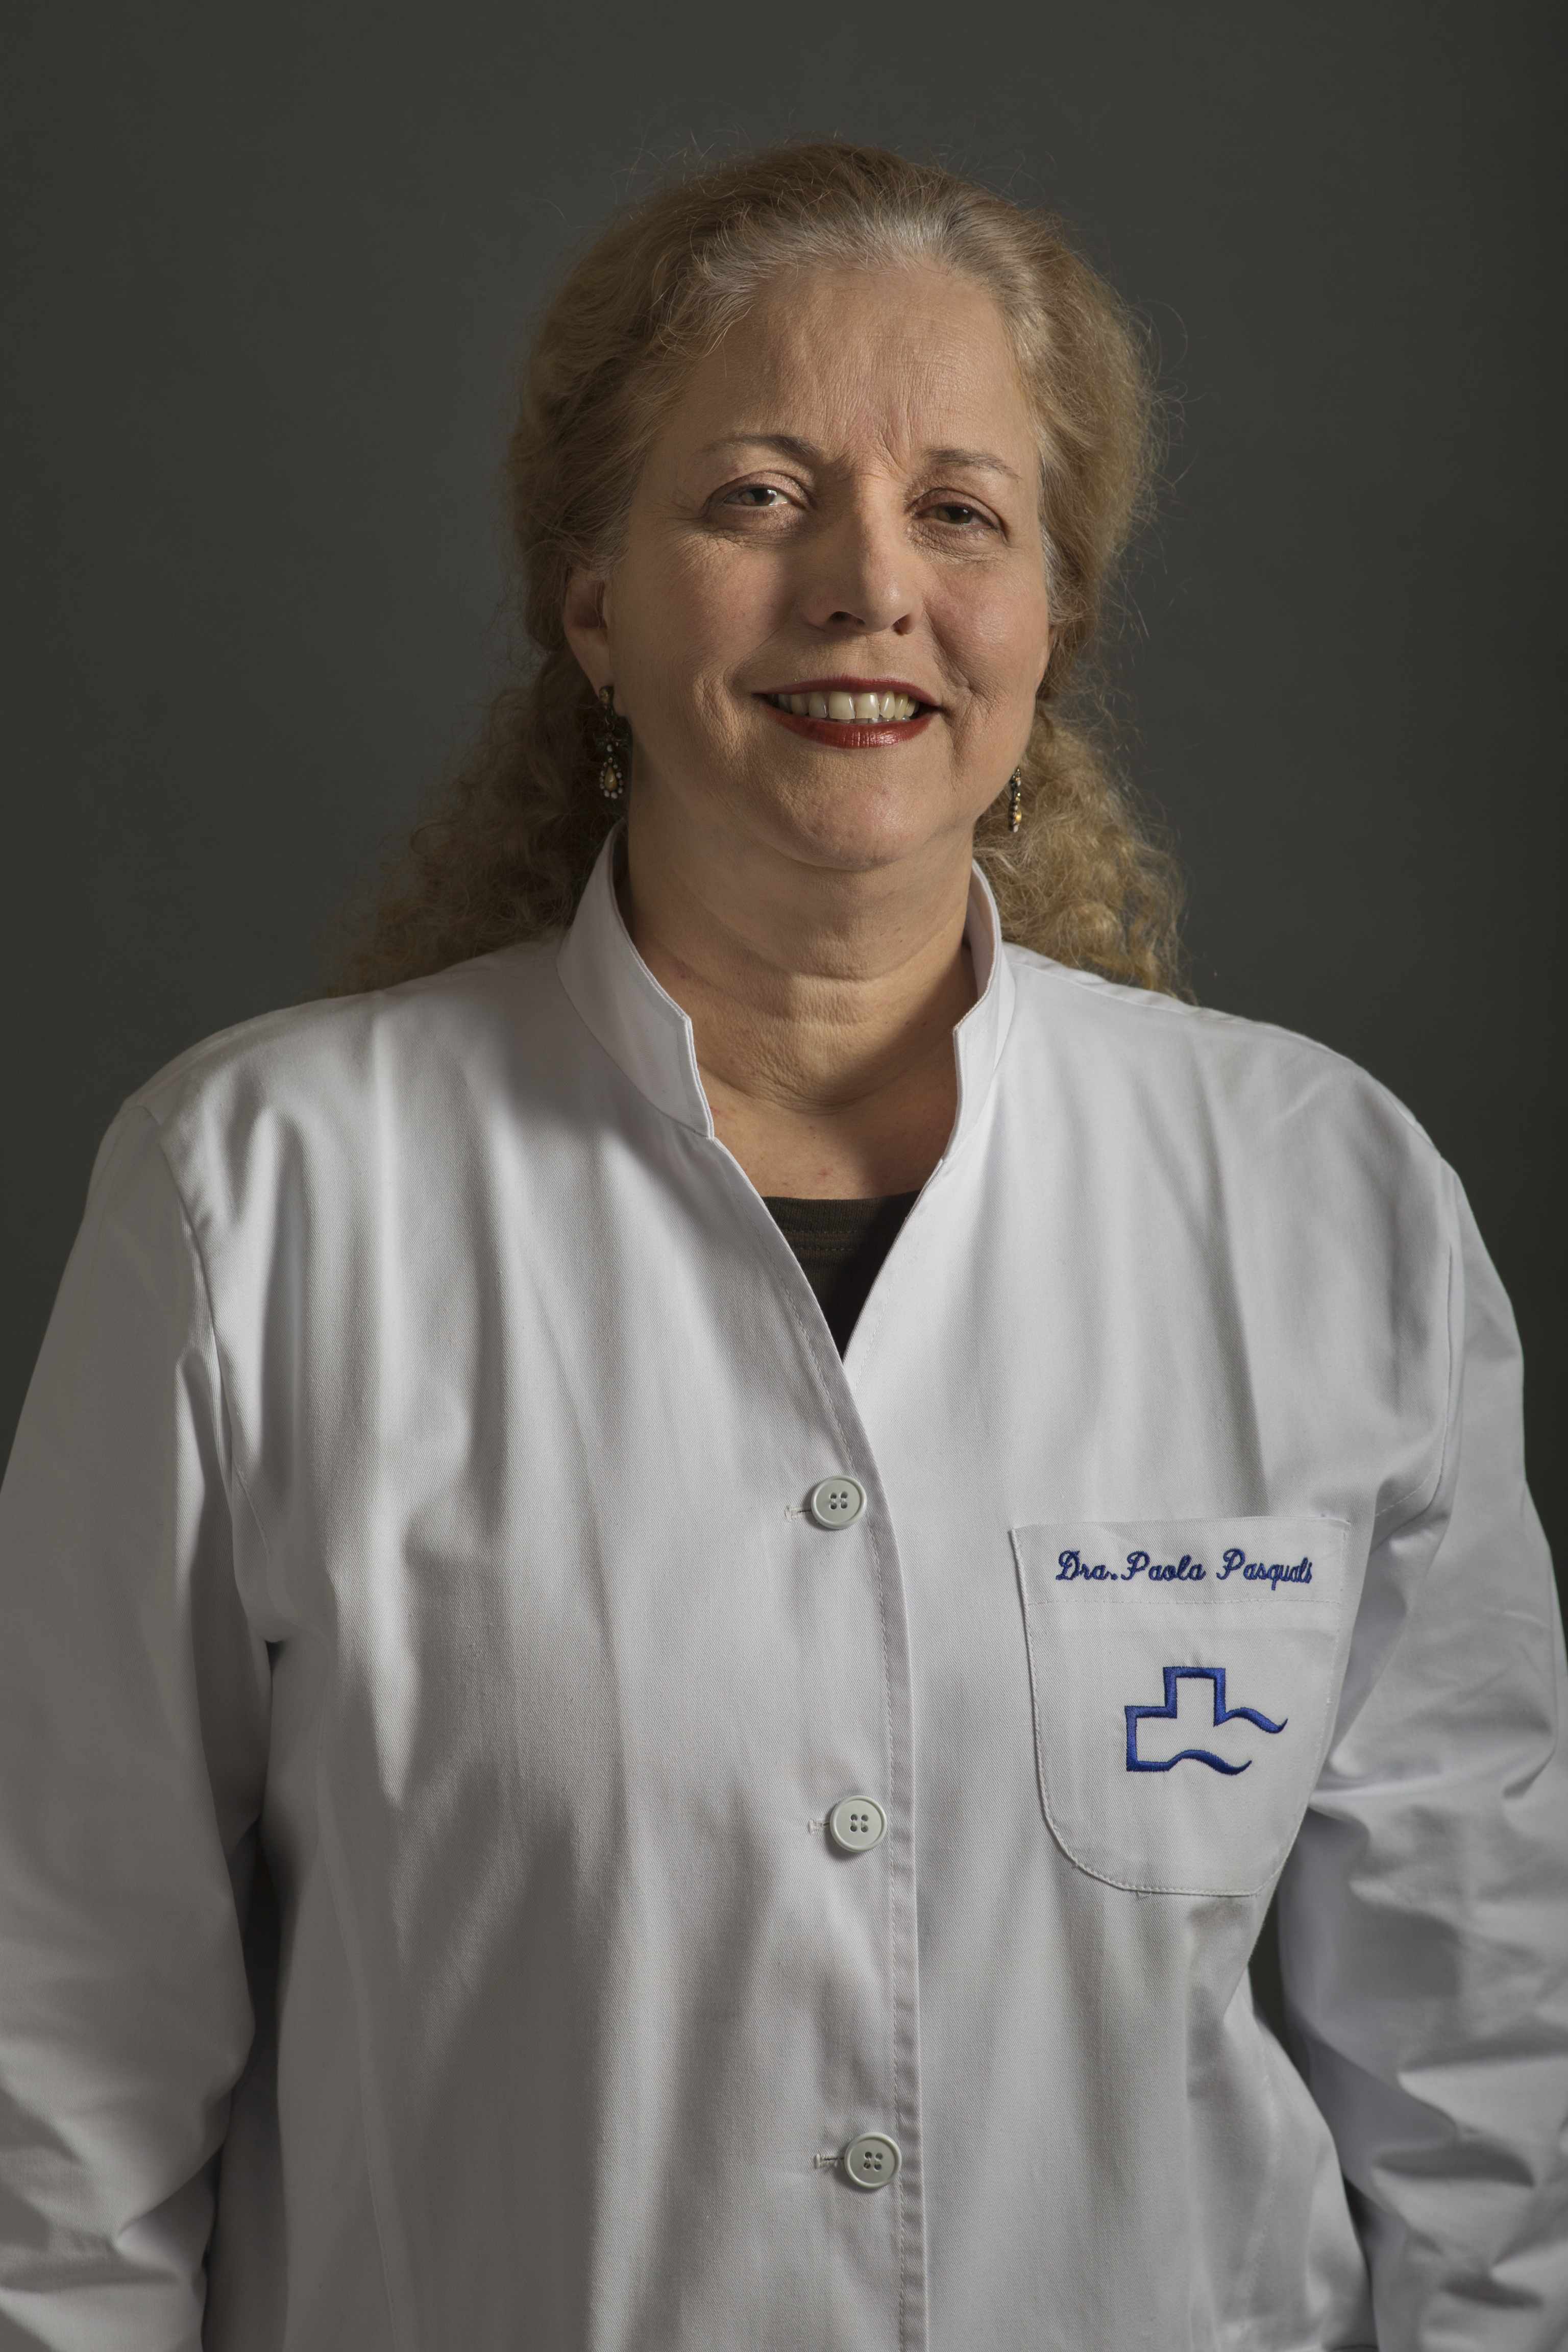 Dra Pasquali